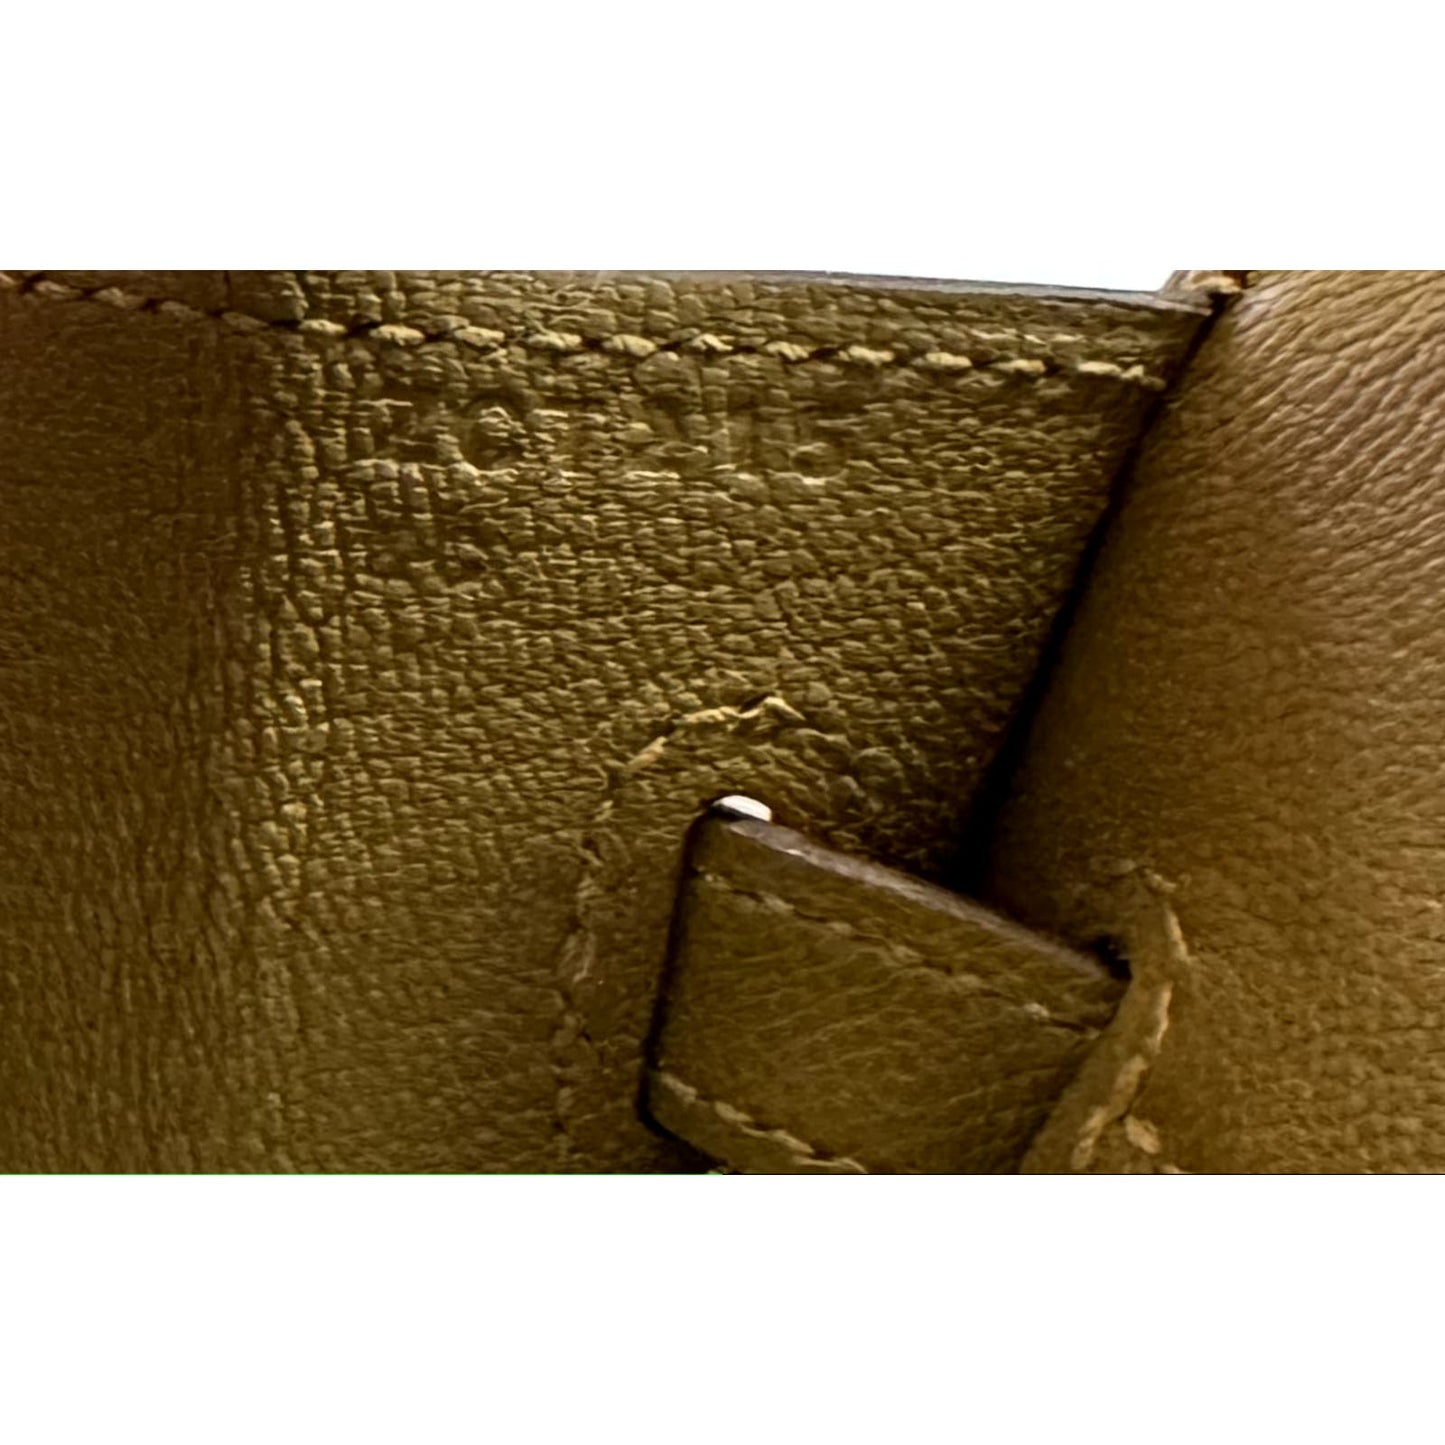 Hermes Birkin 25 Sellier Bronze Dore Madame Leather Gold Hardware Handbag